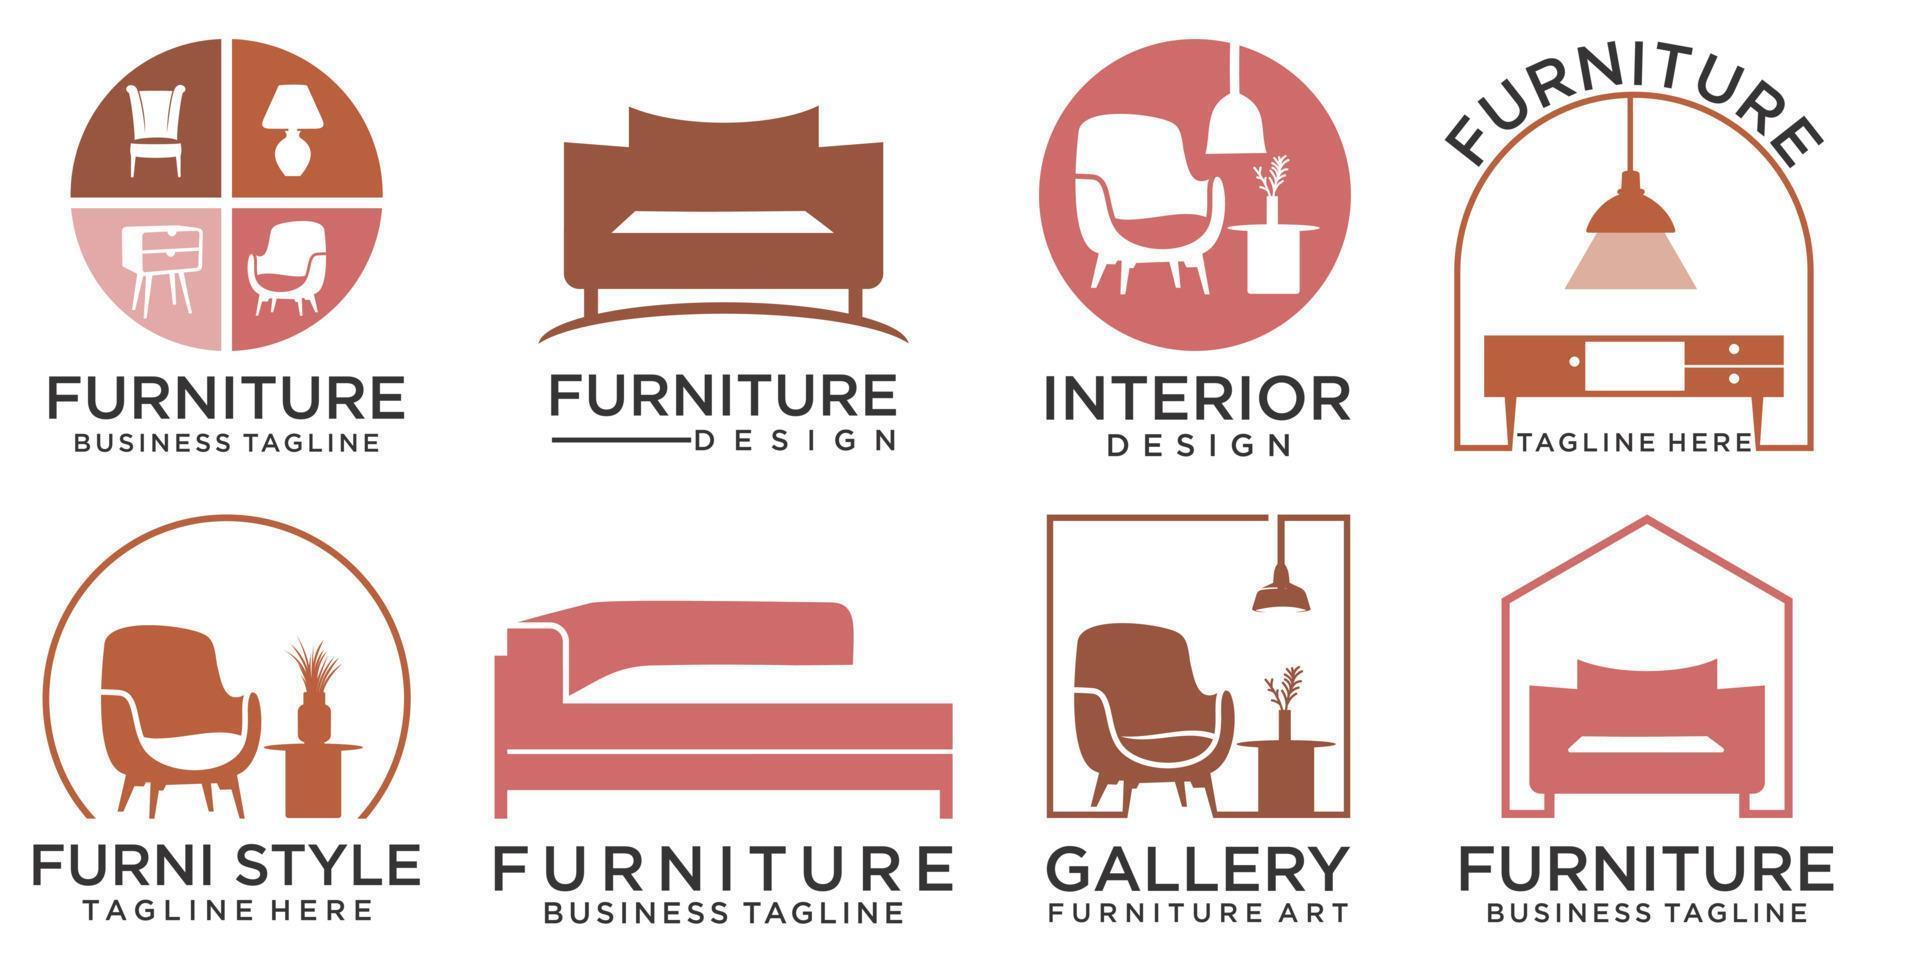 minimalist furniture icon set logo design style vector